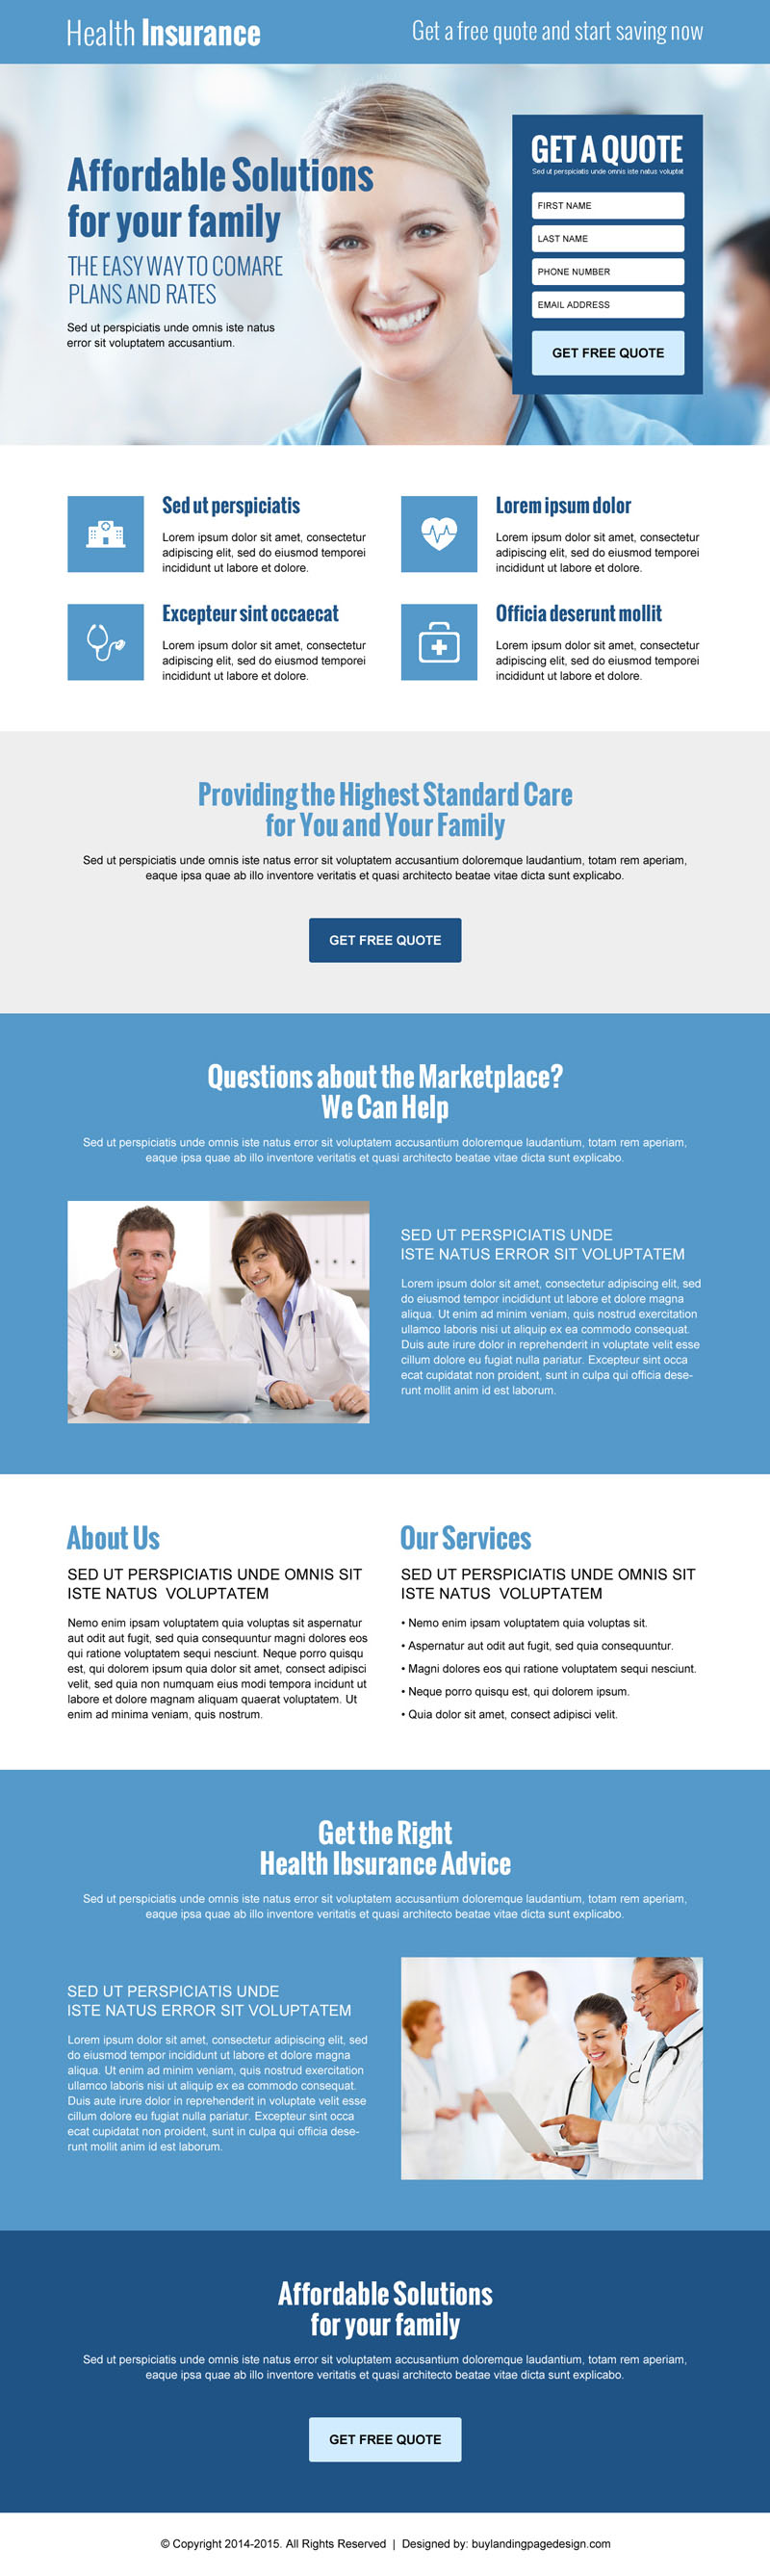 best-health-insurance-lead-generation-responsive-landing-page-design-001